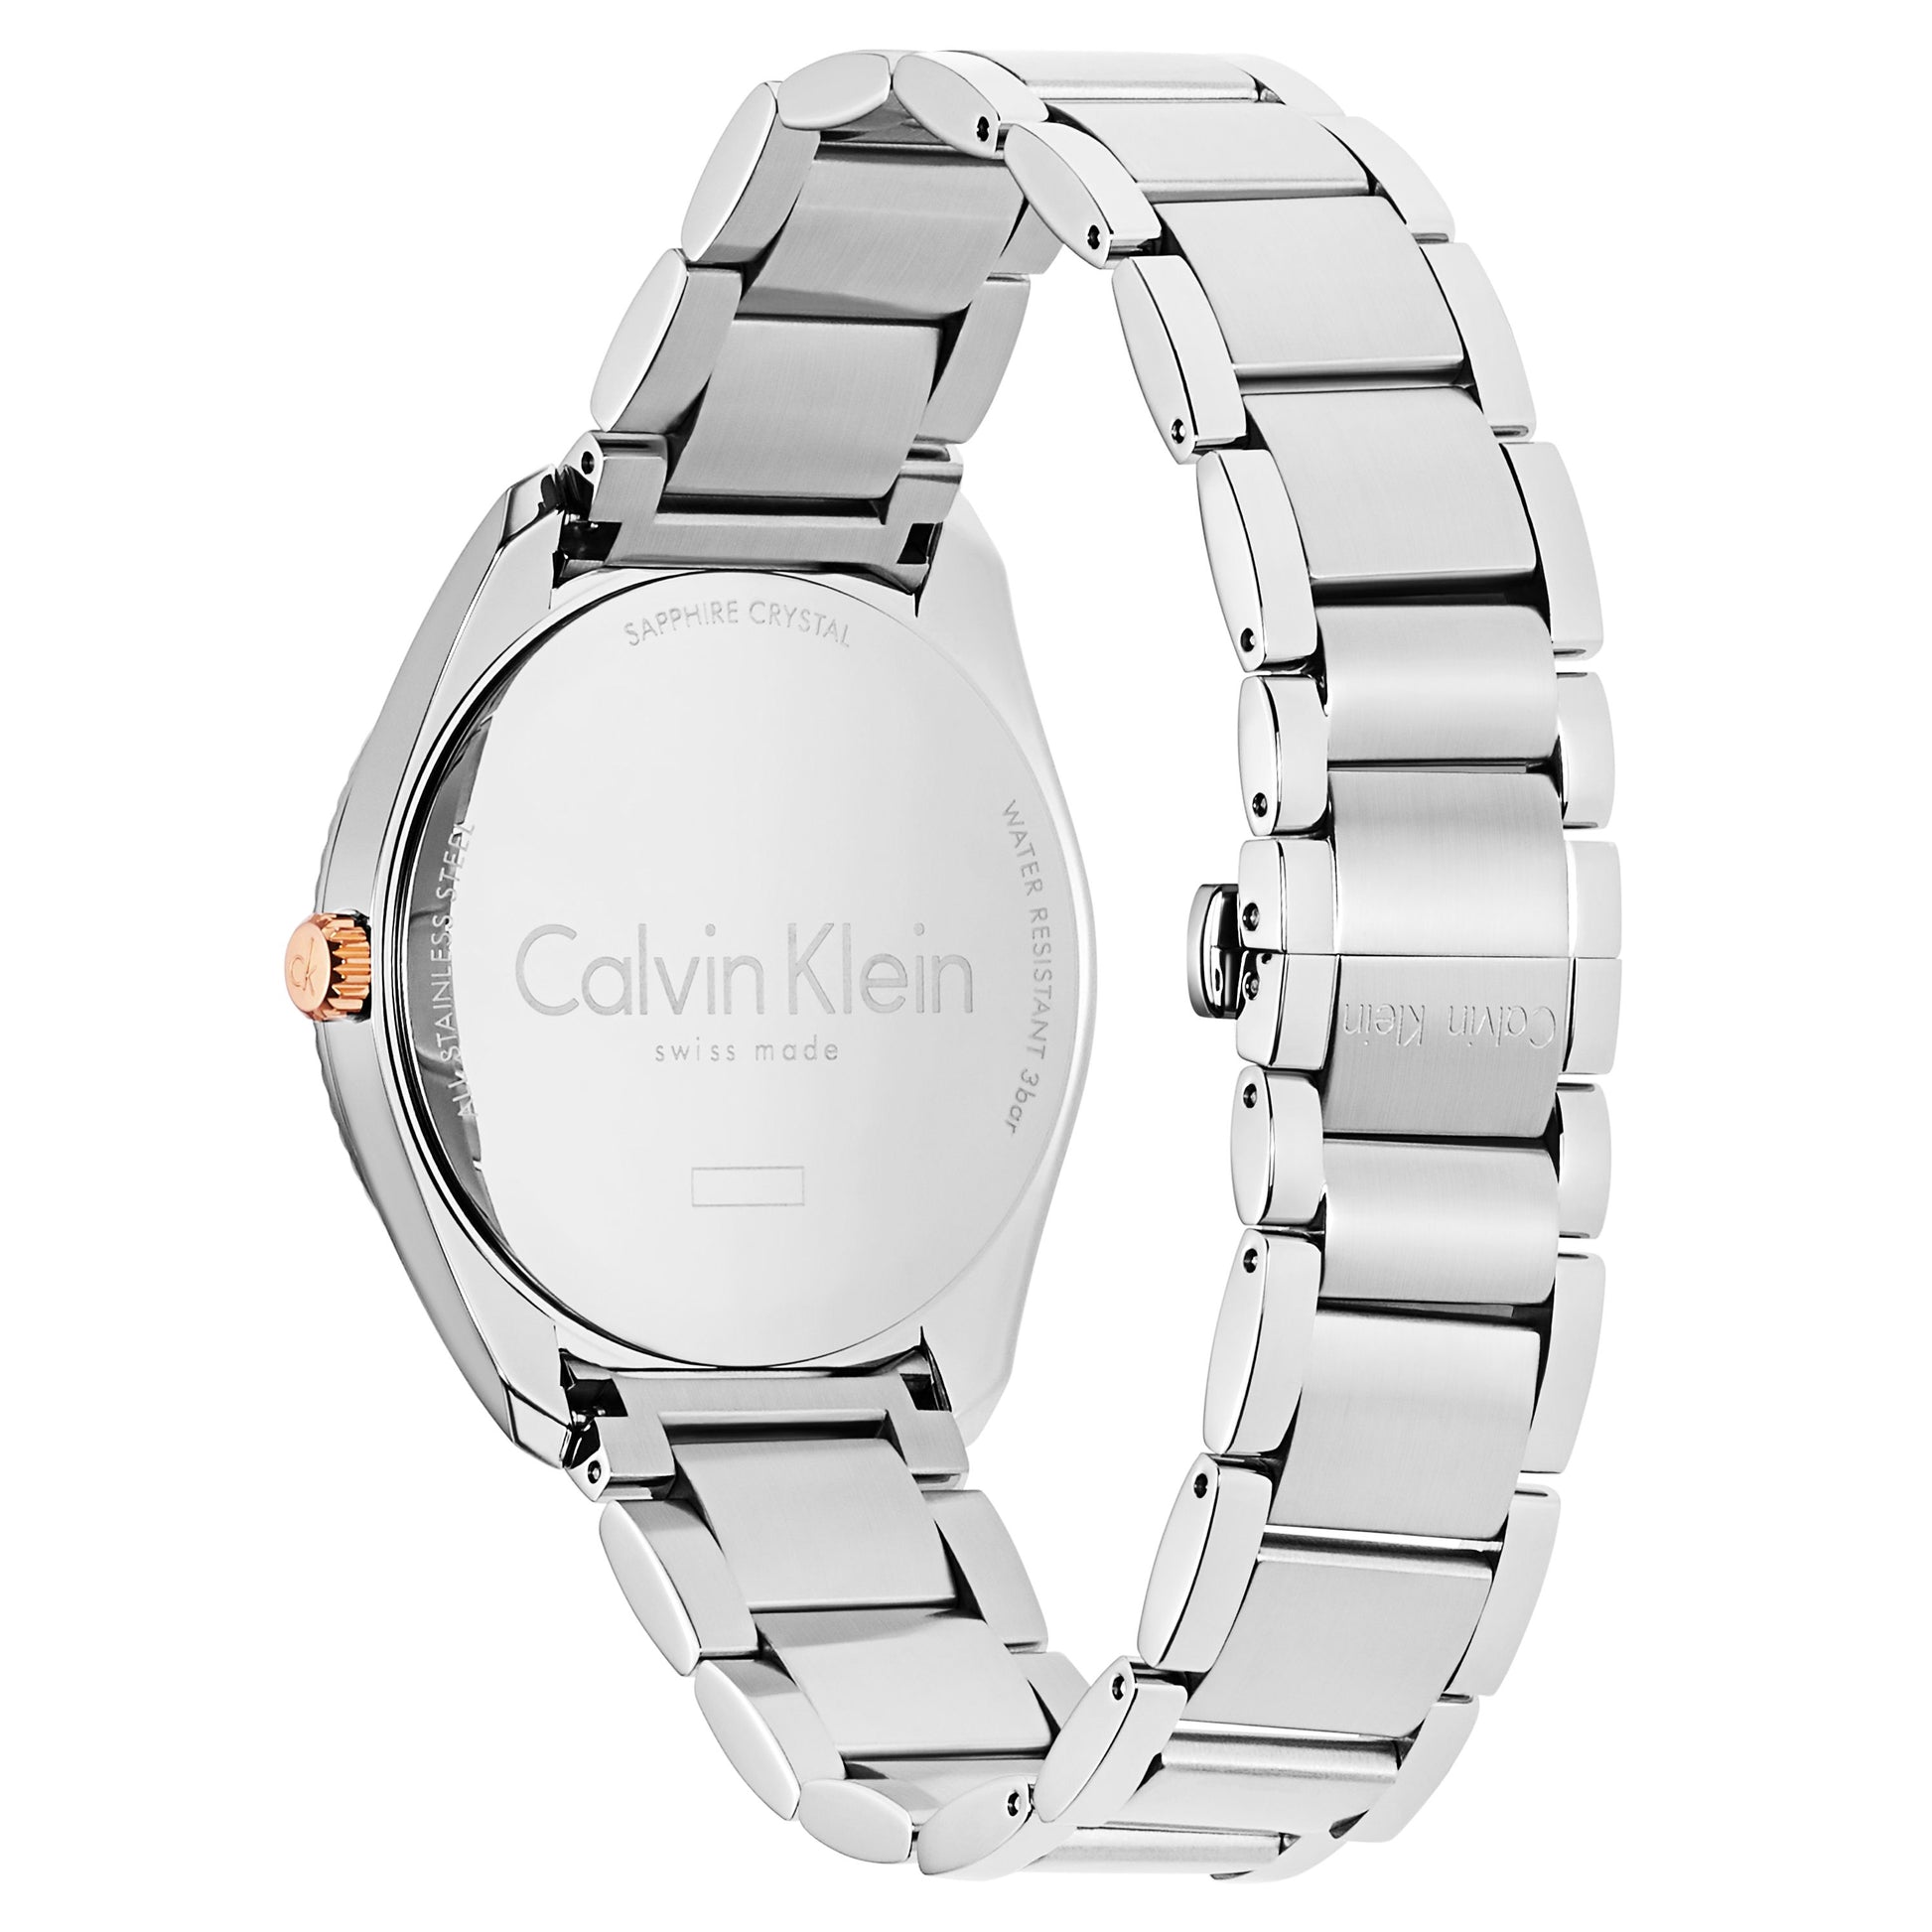 Orologio uomo Calvin Klein Alliance - K5R31B46 - Simmi Gioiellerie -Orologi